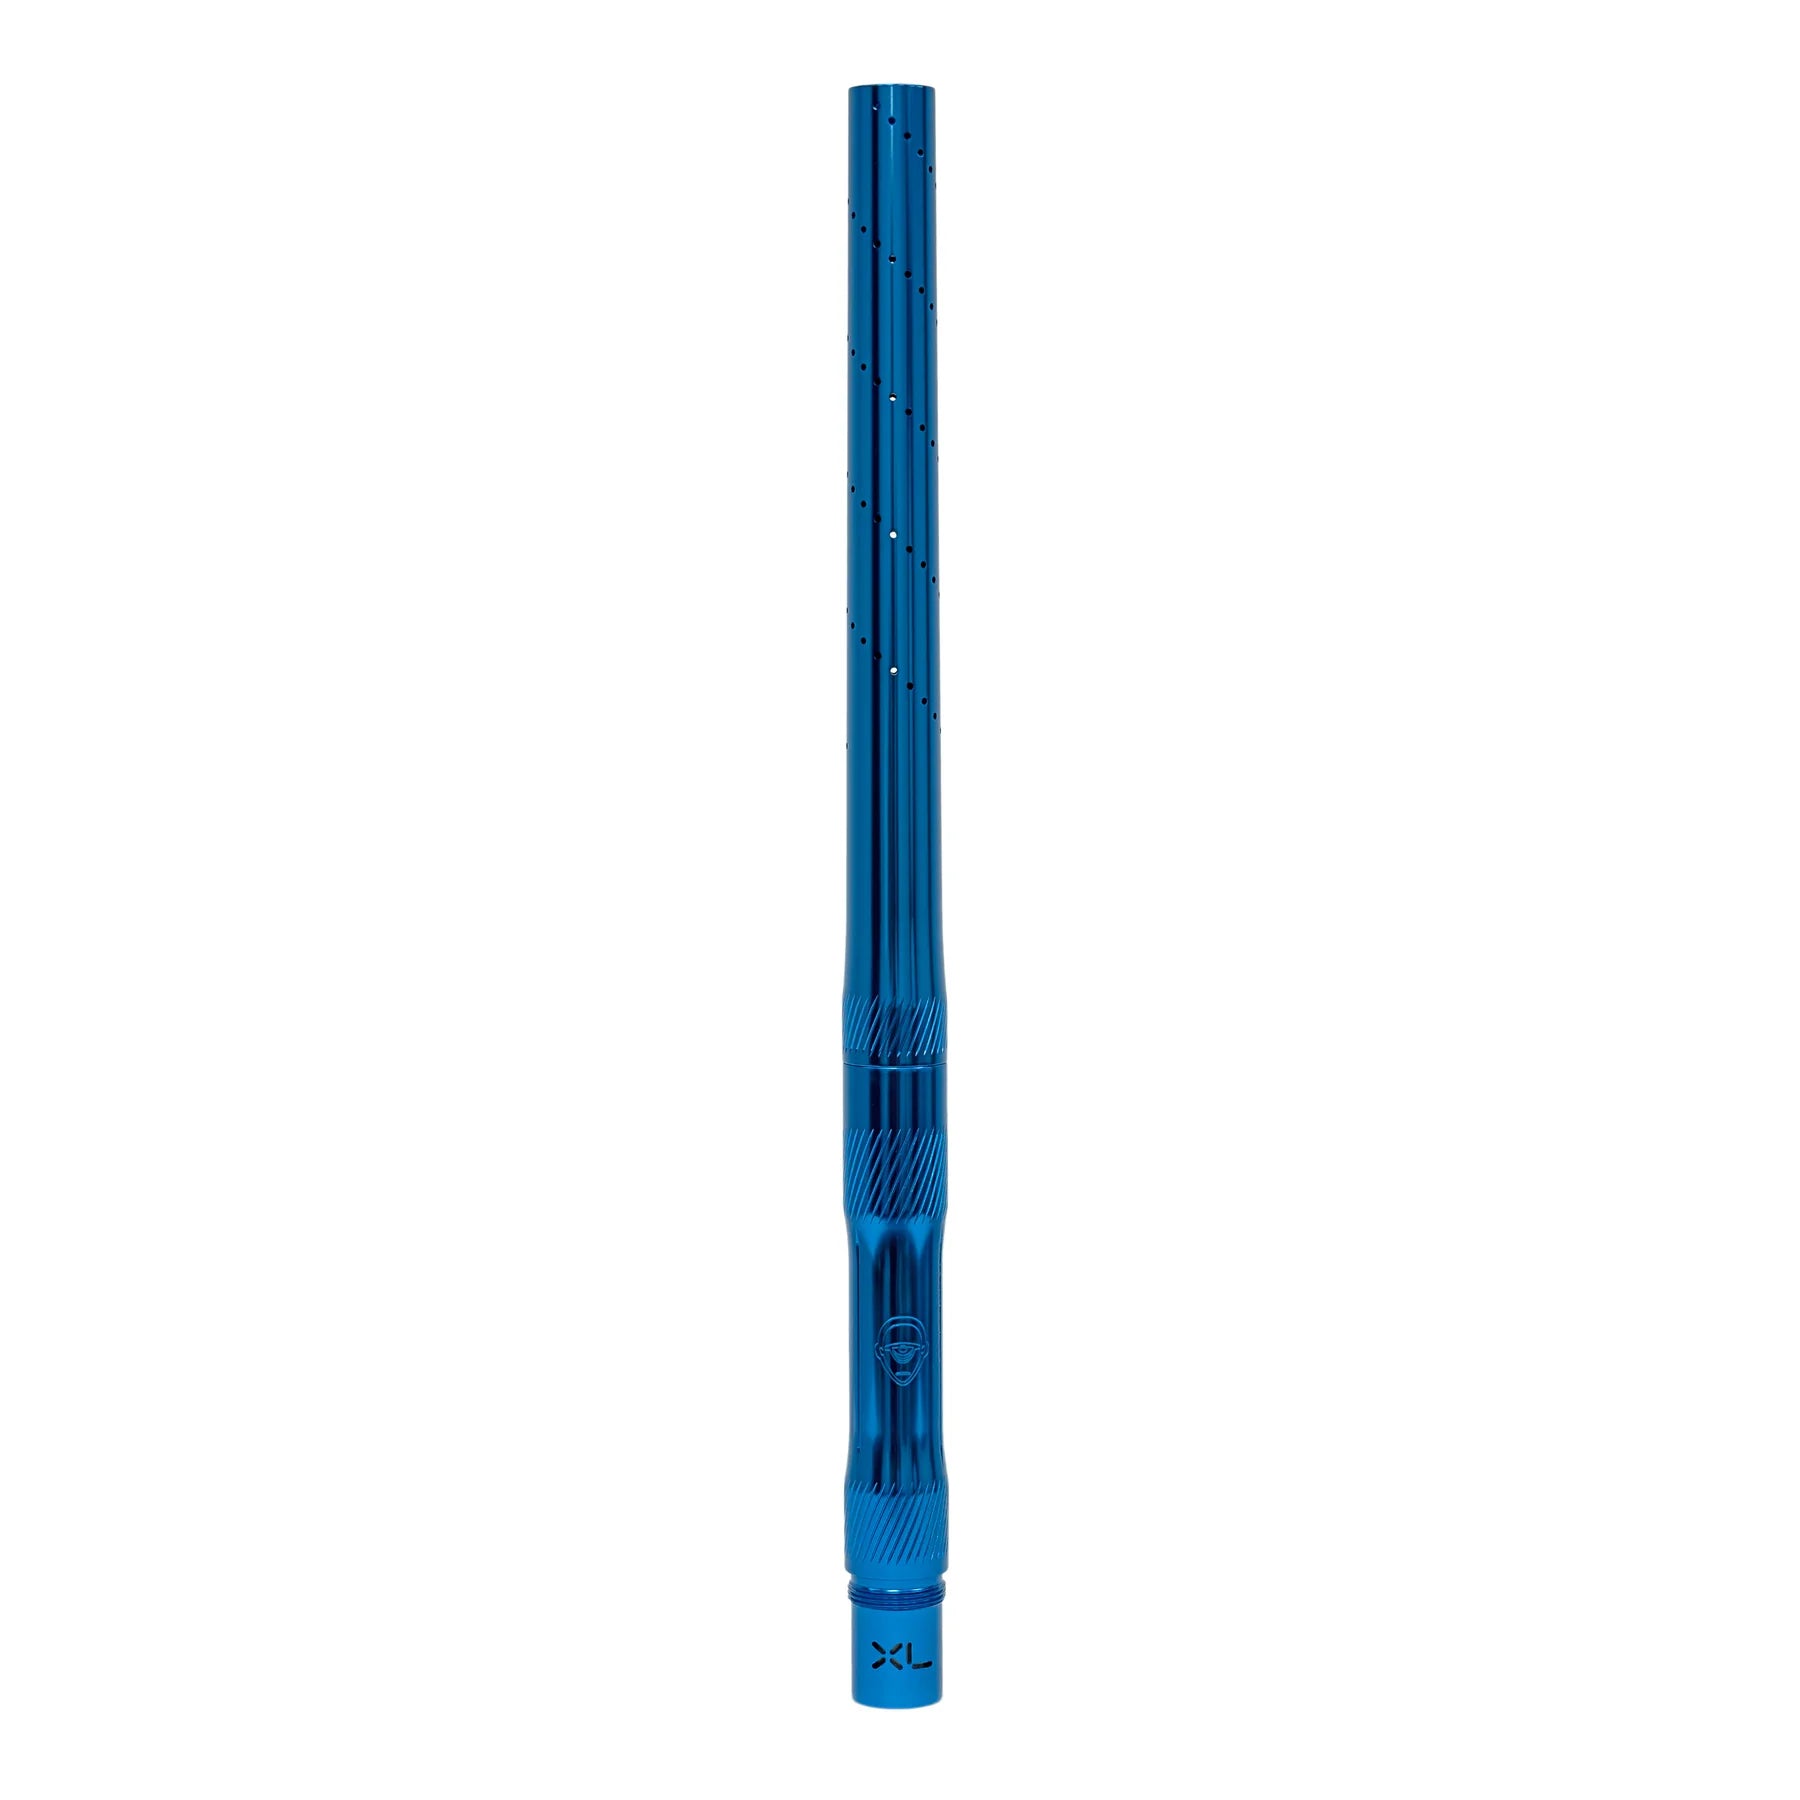 FREAK XL - Blue Anodized - Full Barrel Kit - Autococker Thread - Aluminum Insert